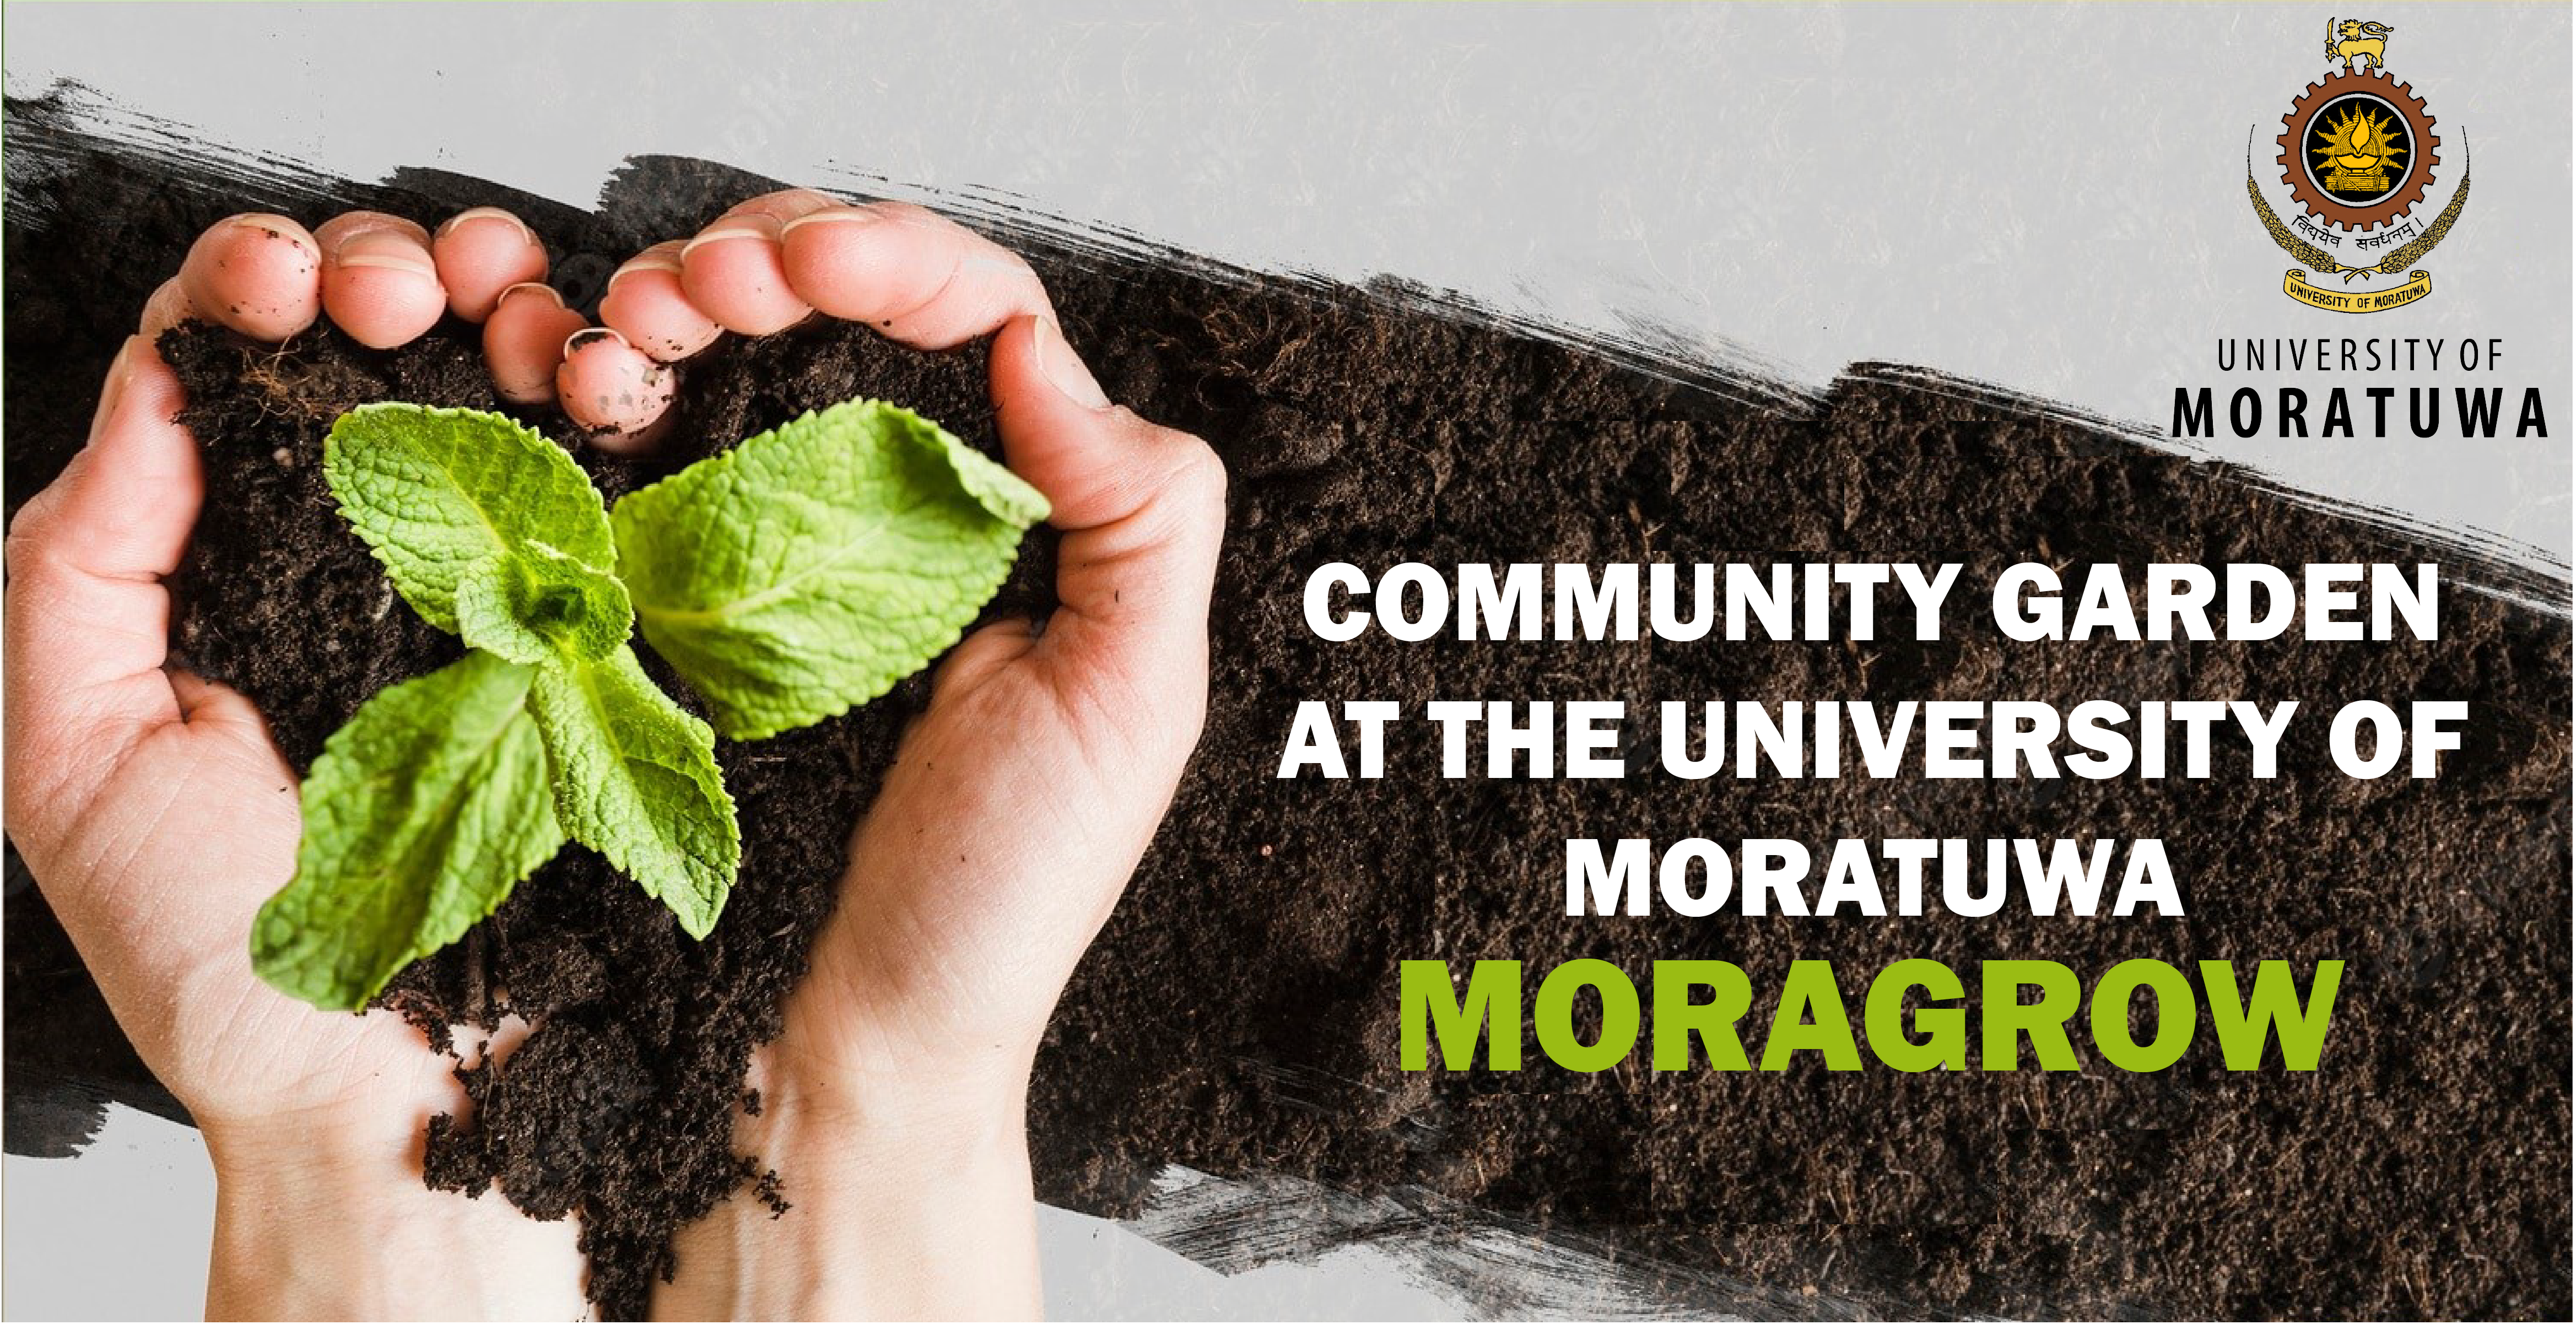 COMMUNITY GARDEN AT THE UNIVERSITY OF MORATUWA: MORAGROW